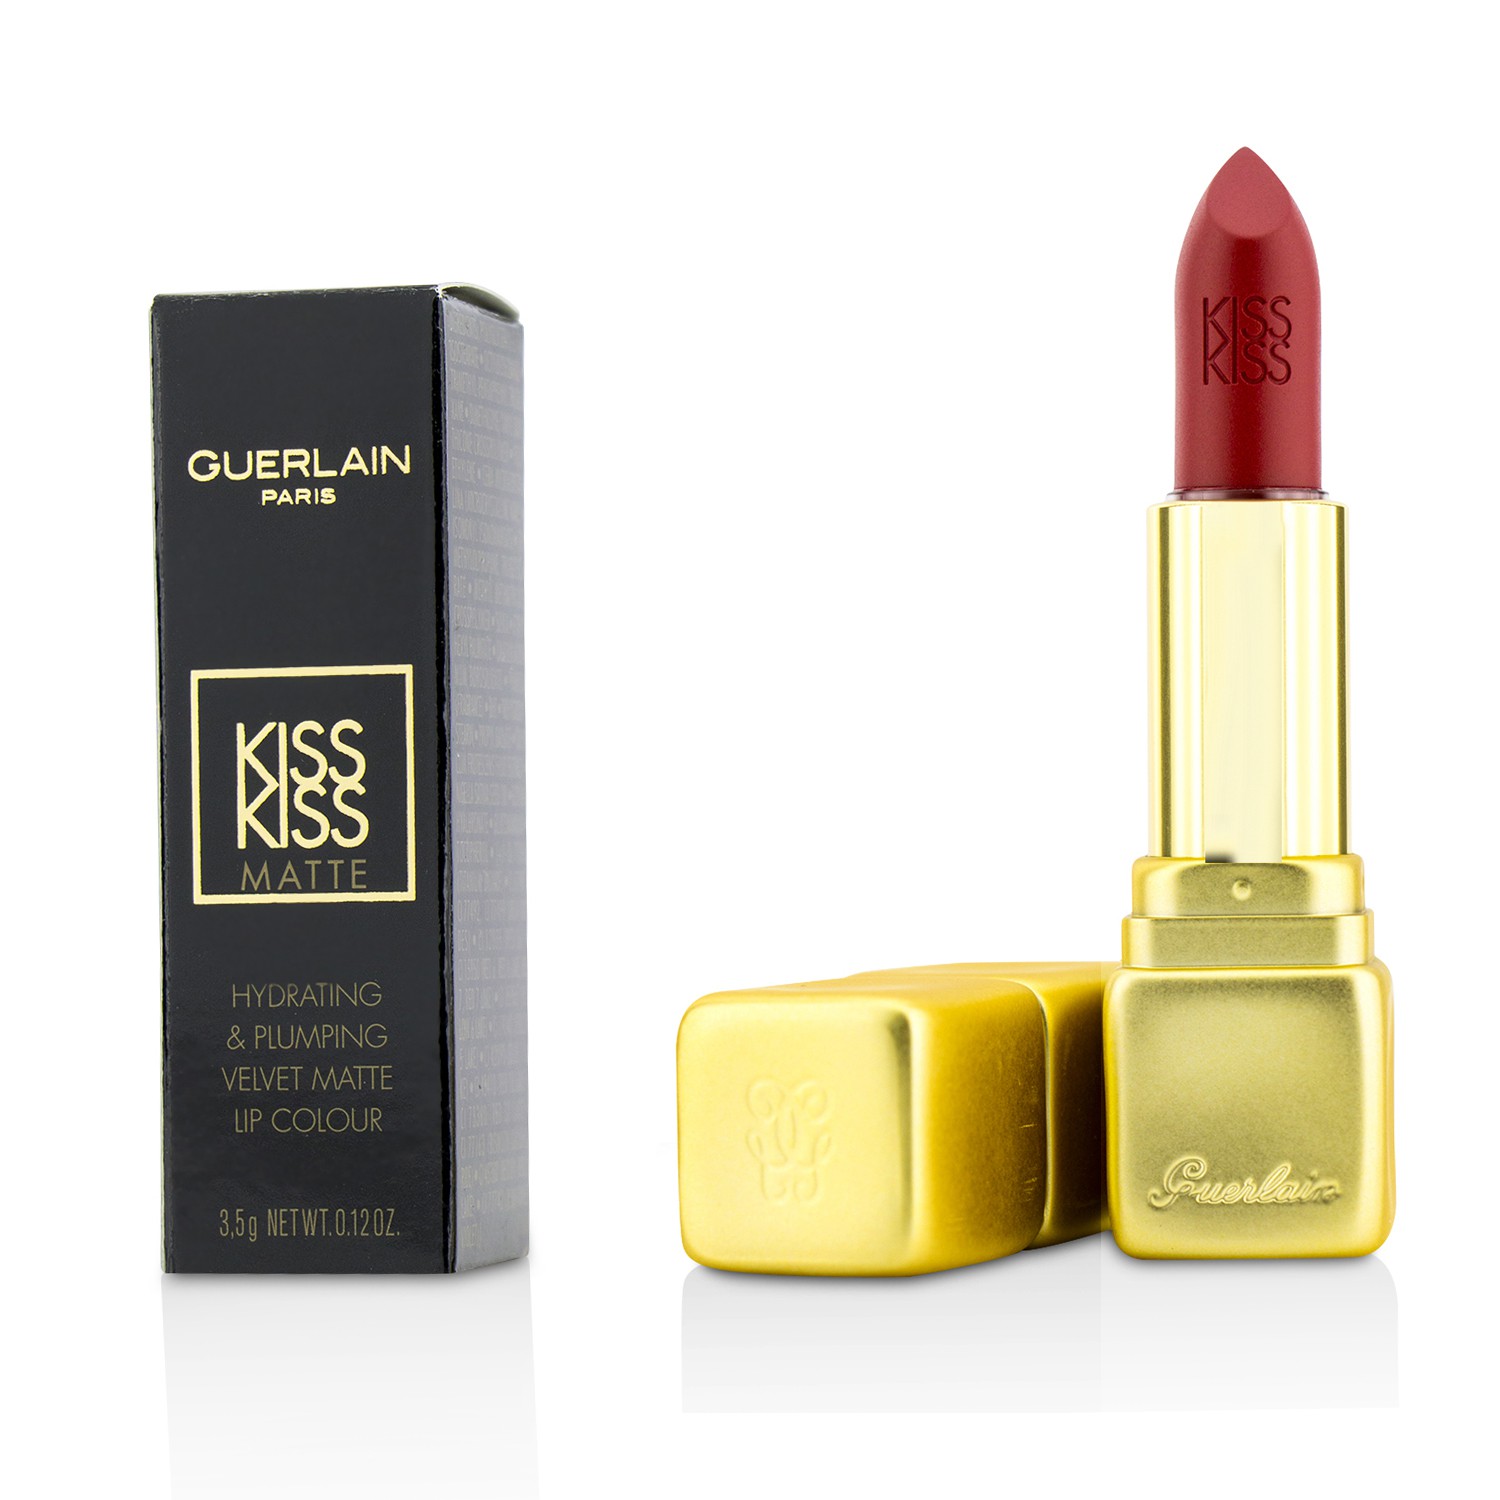 KissKiss Matte Hydrating Matte Lip Colour - # M330 Spicy Burgundy Guerlain Image